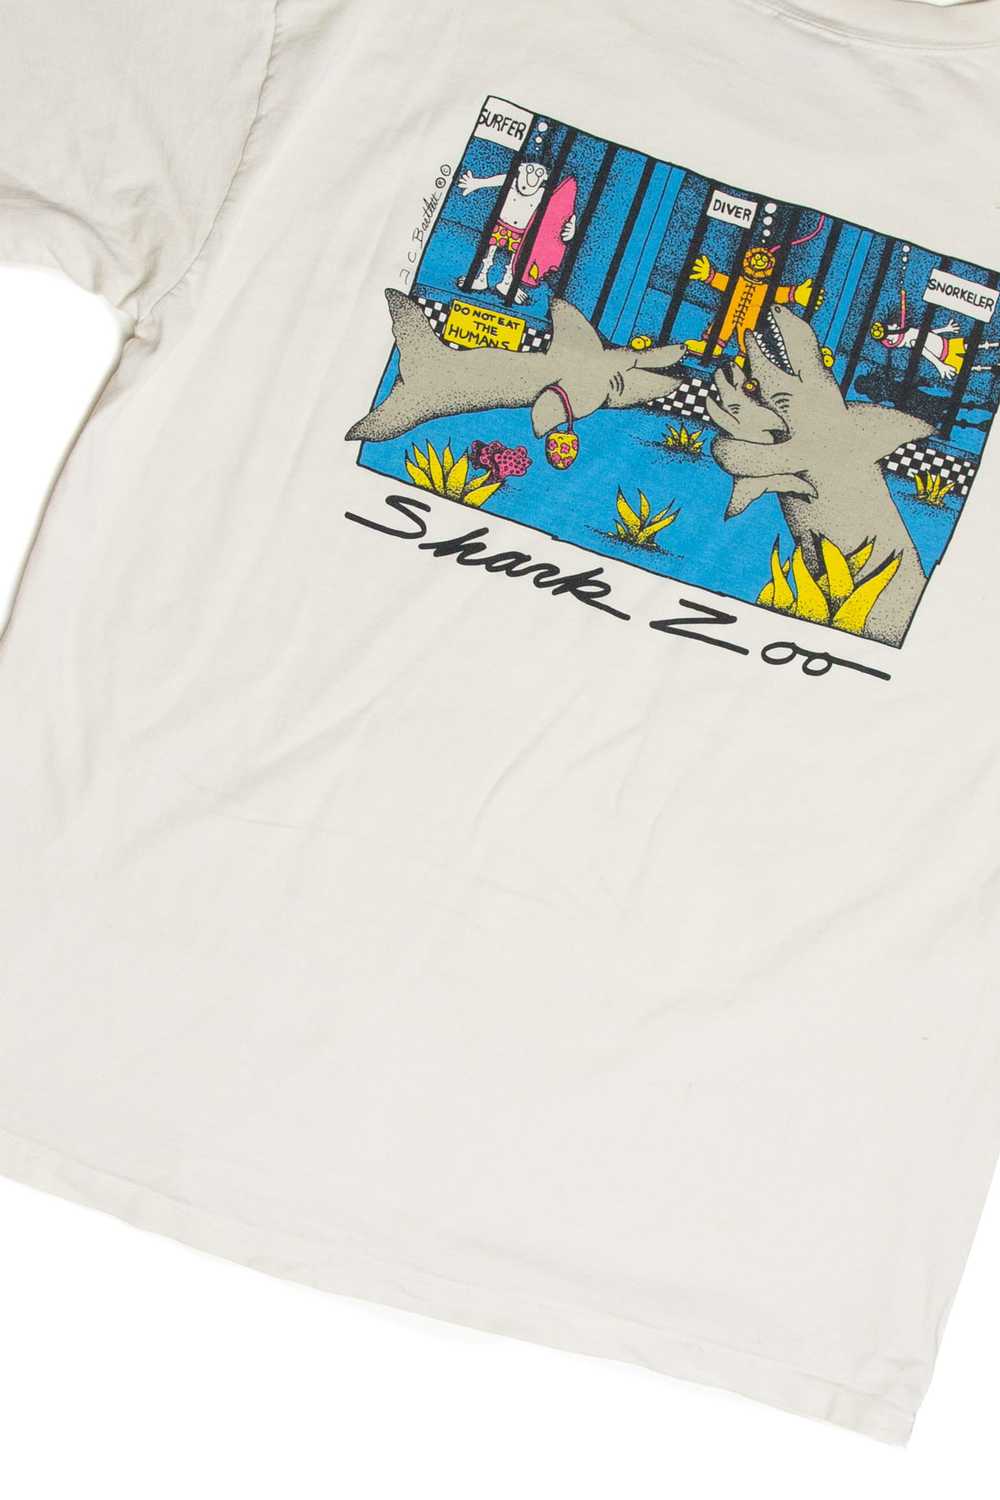 Vintage Shark Zoo Orlando Florida T-Shirt - image 9